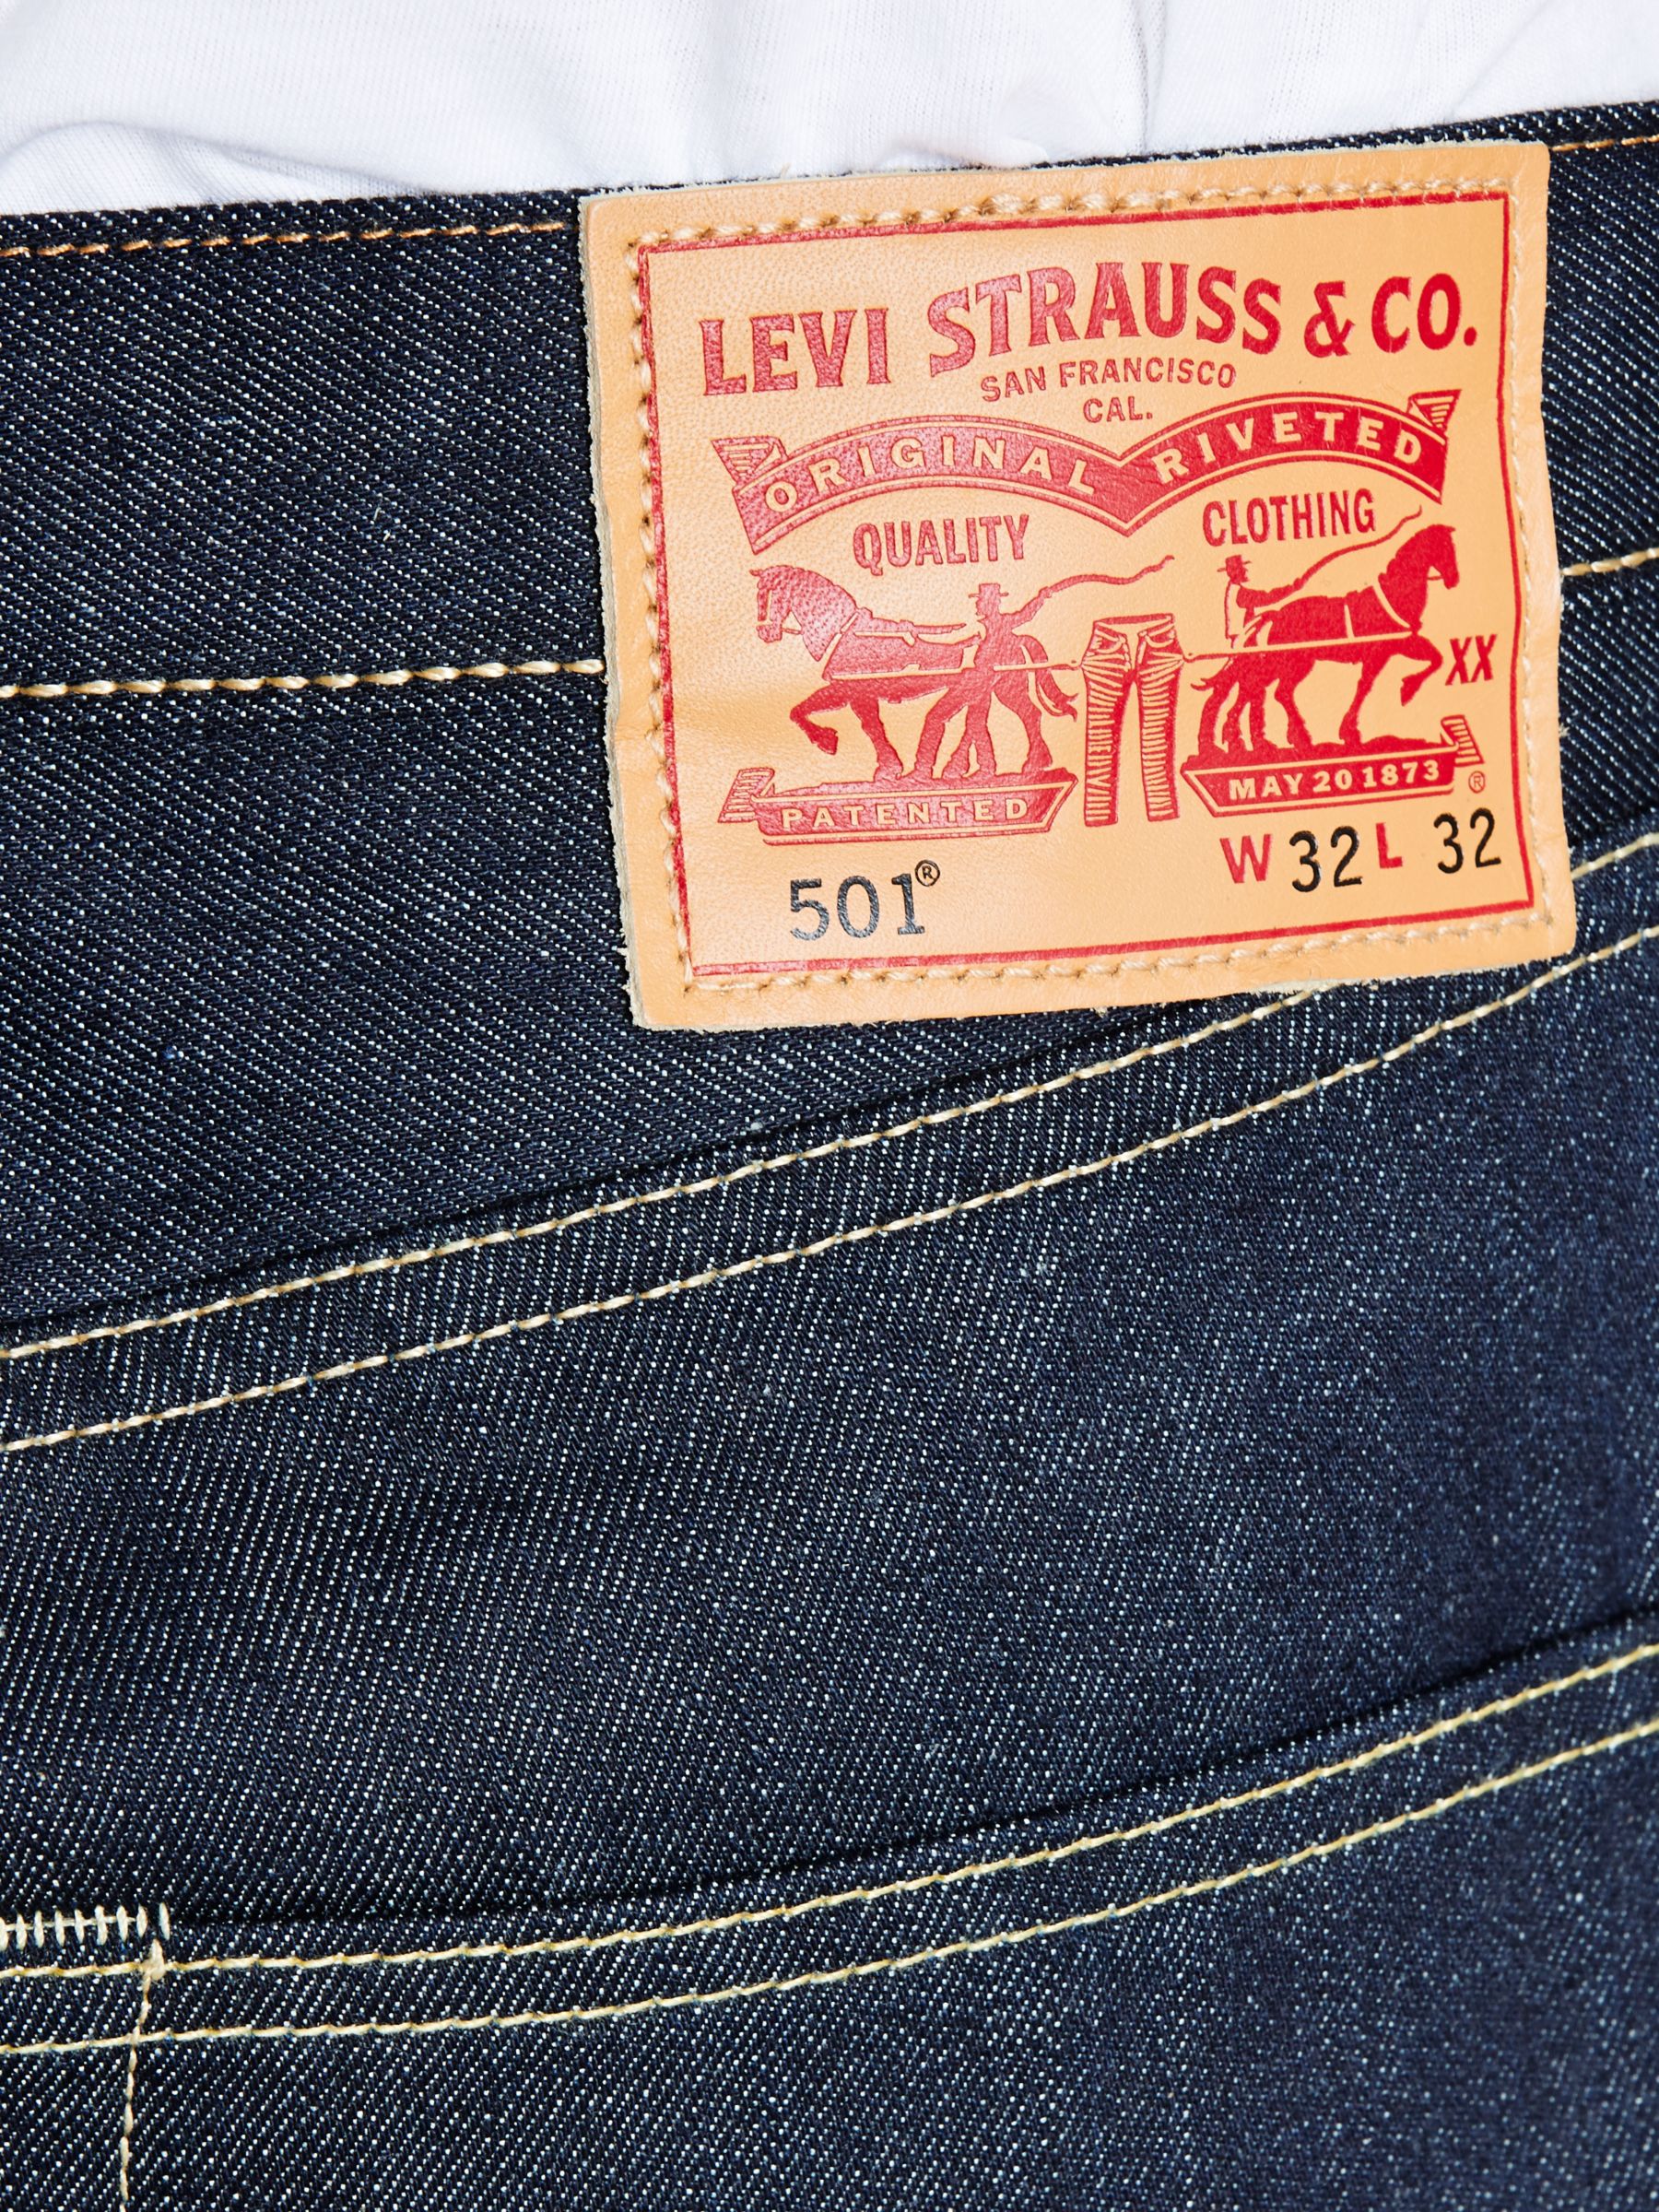 levis 501 selvedge jeans